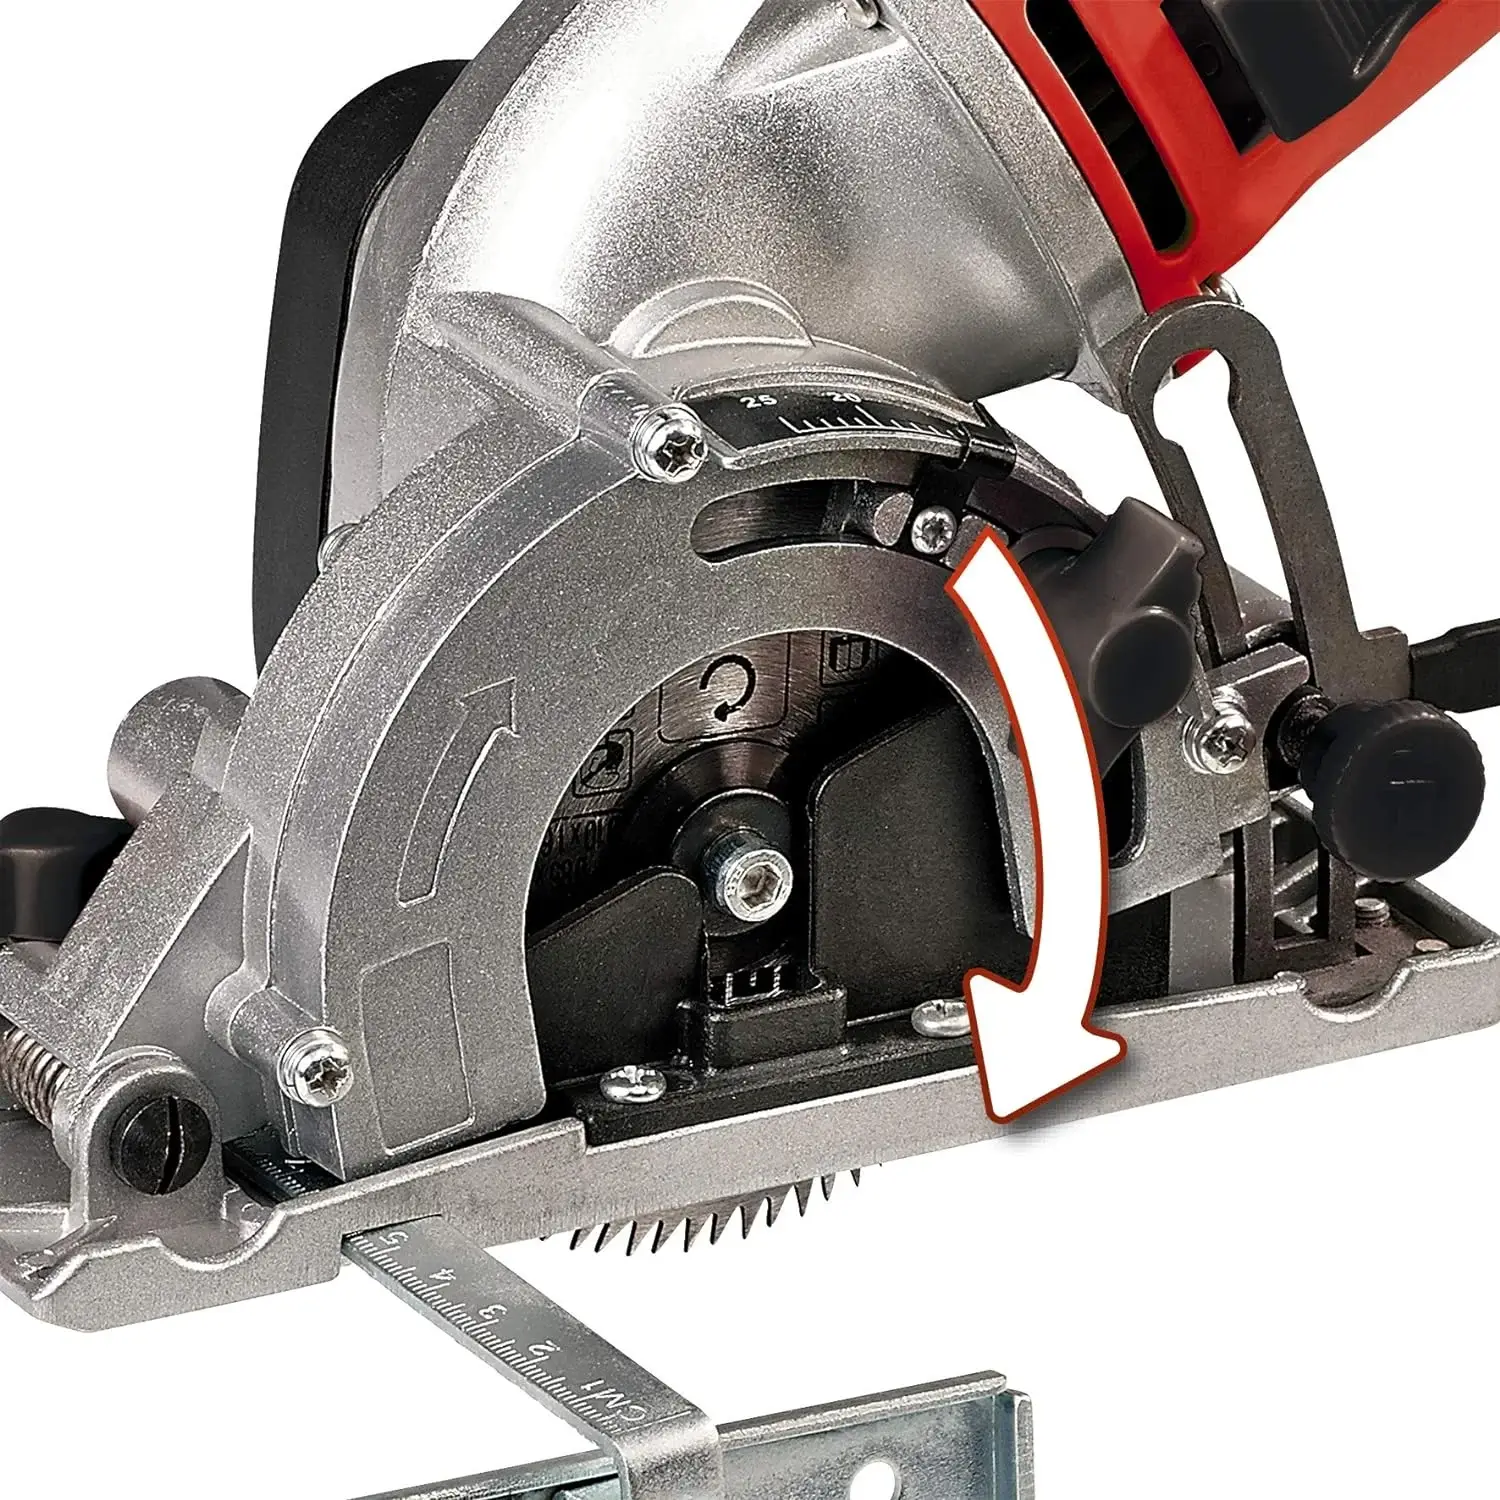 comprar-mejor-precio-Mini-cortadora-circular-de-mano-Einhell-TC-CS-860-kit-450W